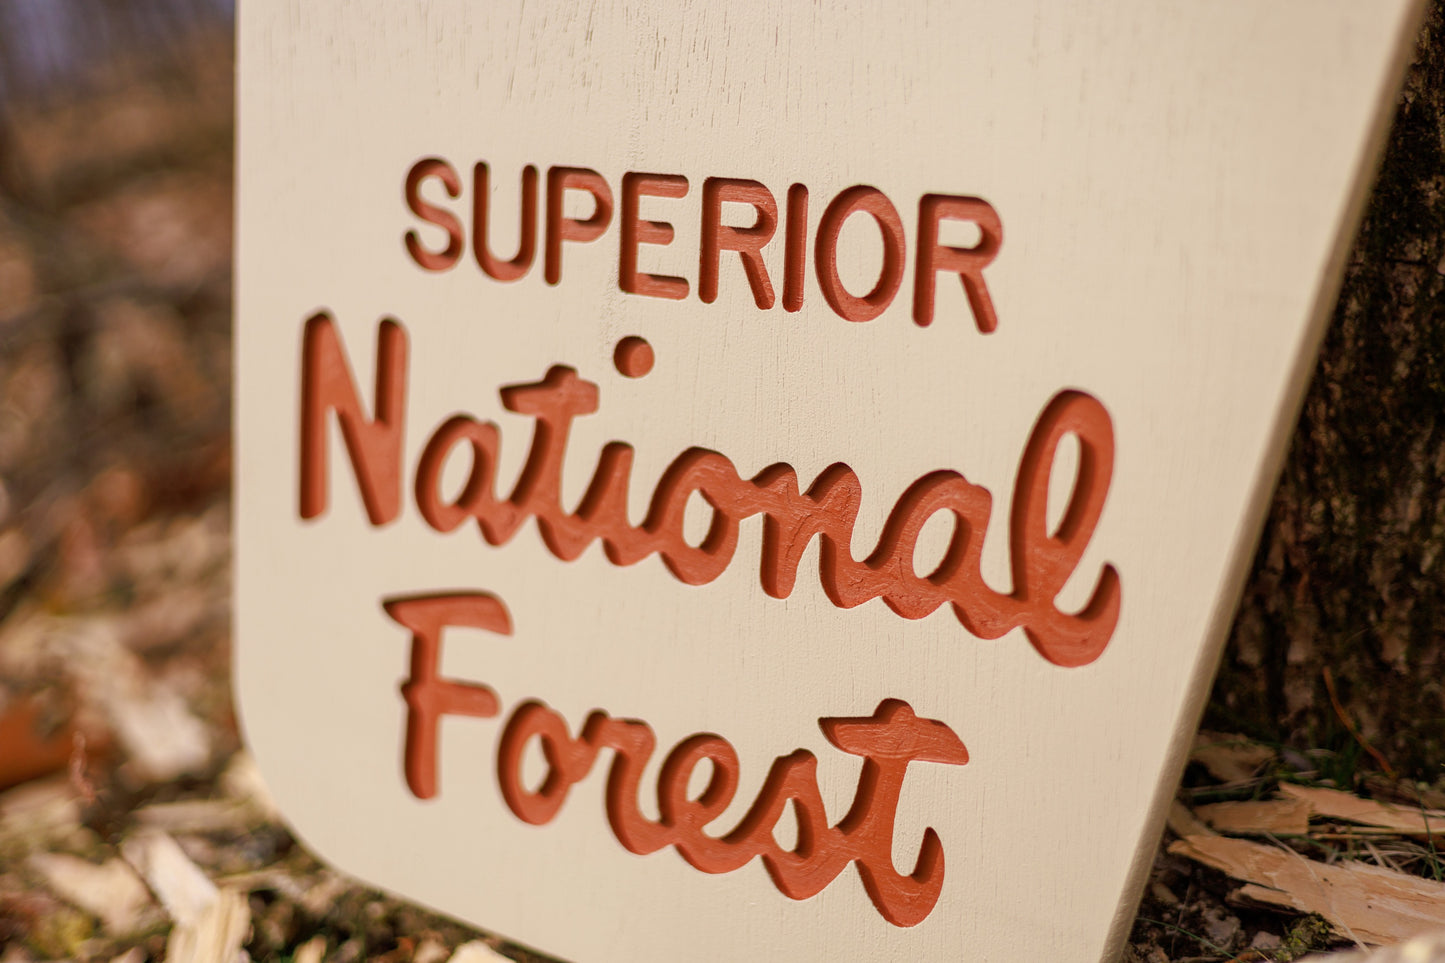 BWCA Wilderness - Superior National Forest Replica Sign